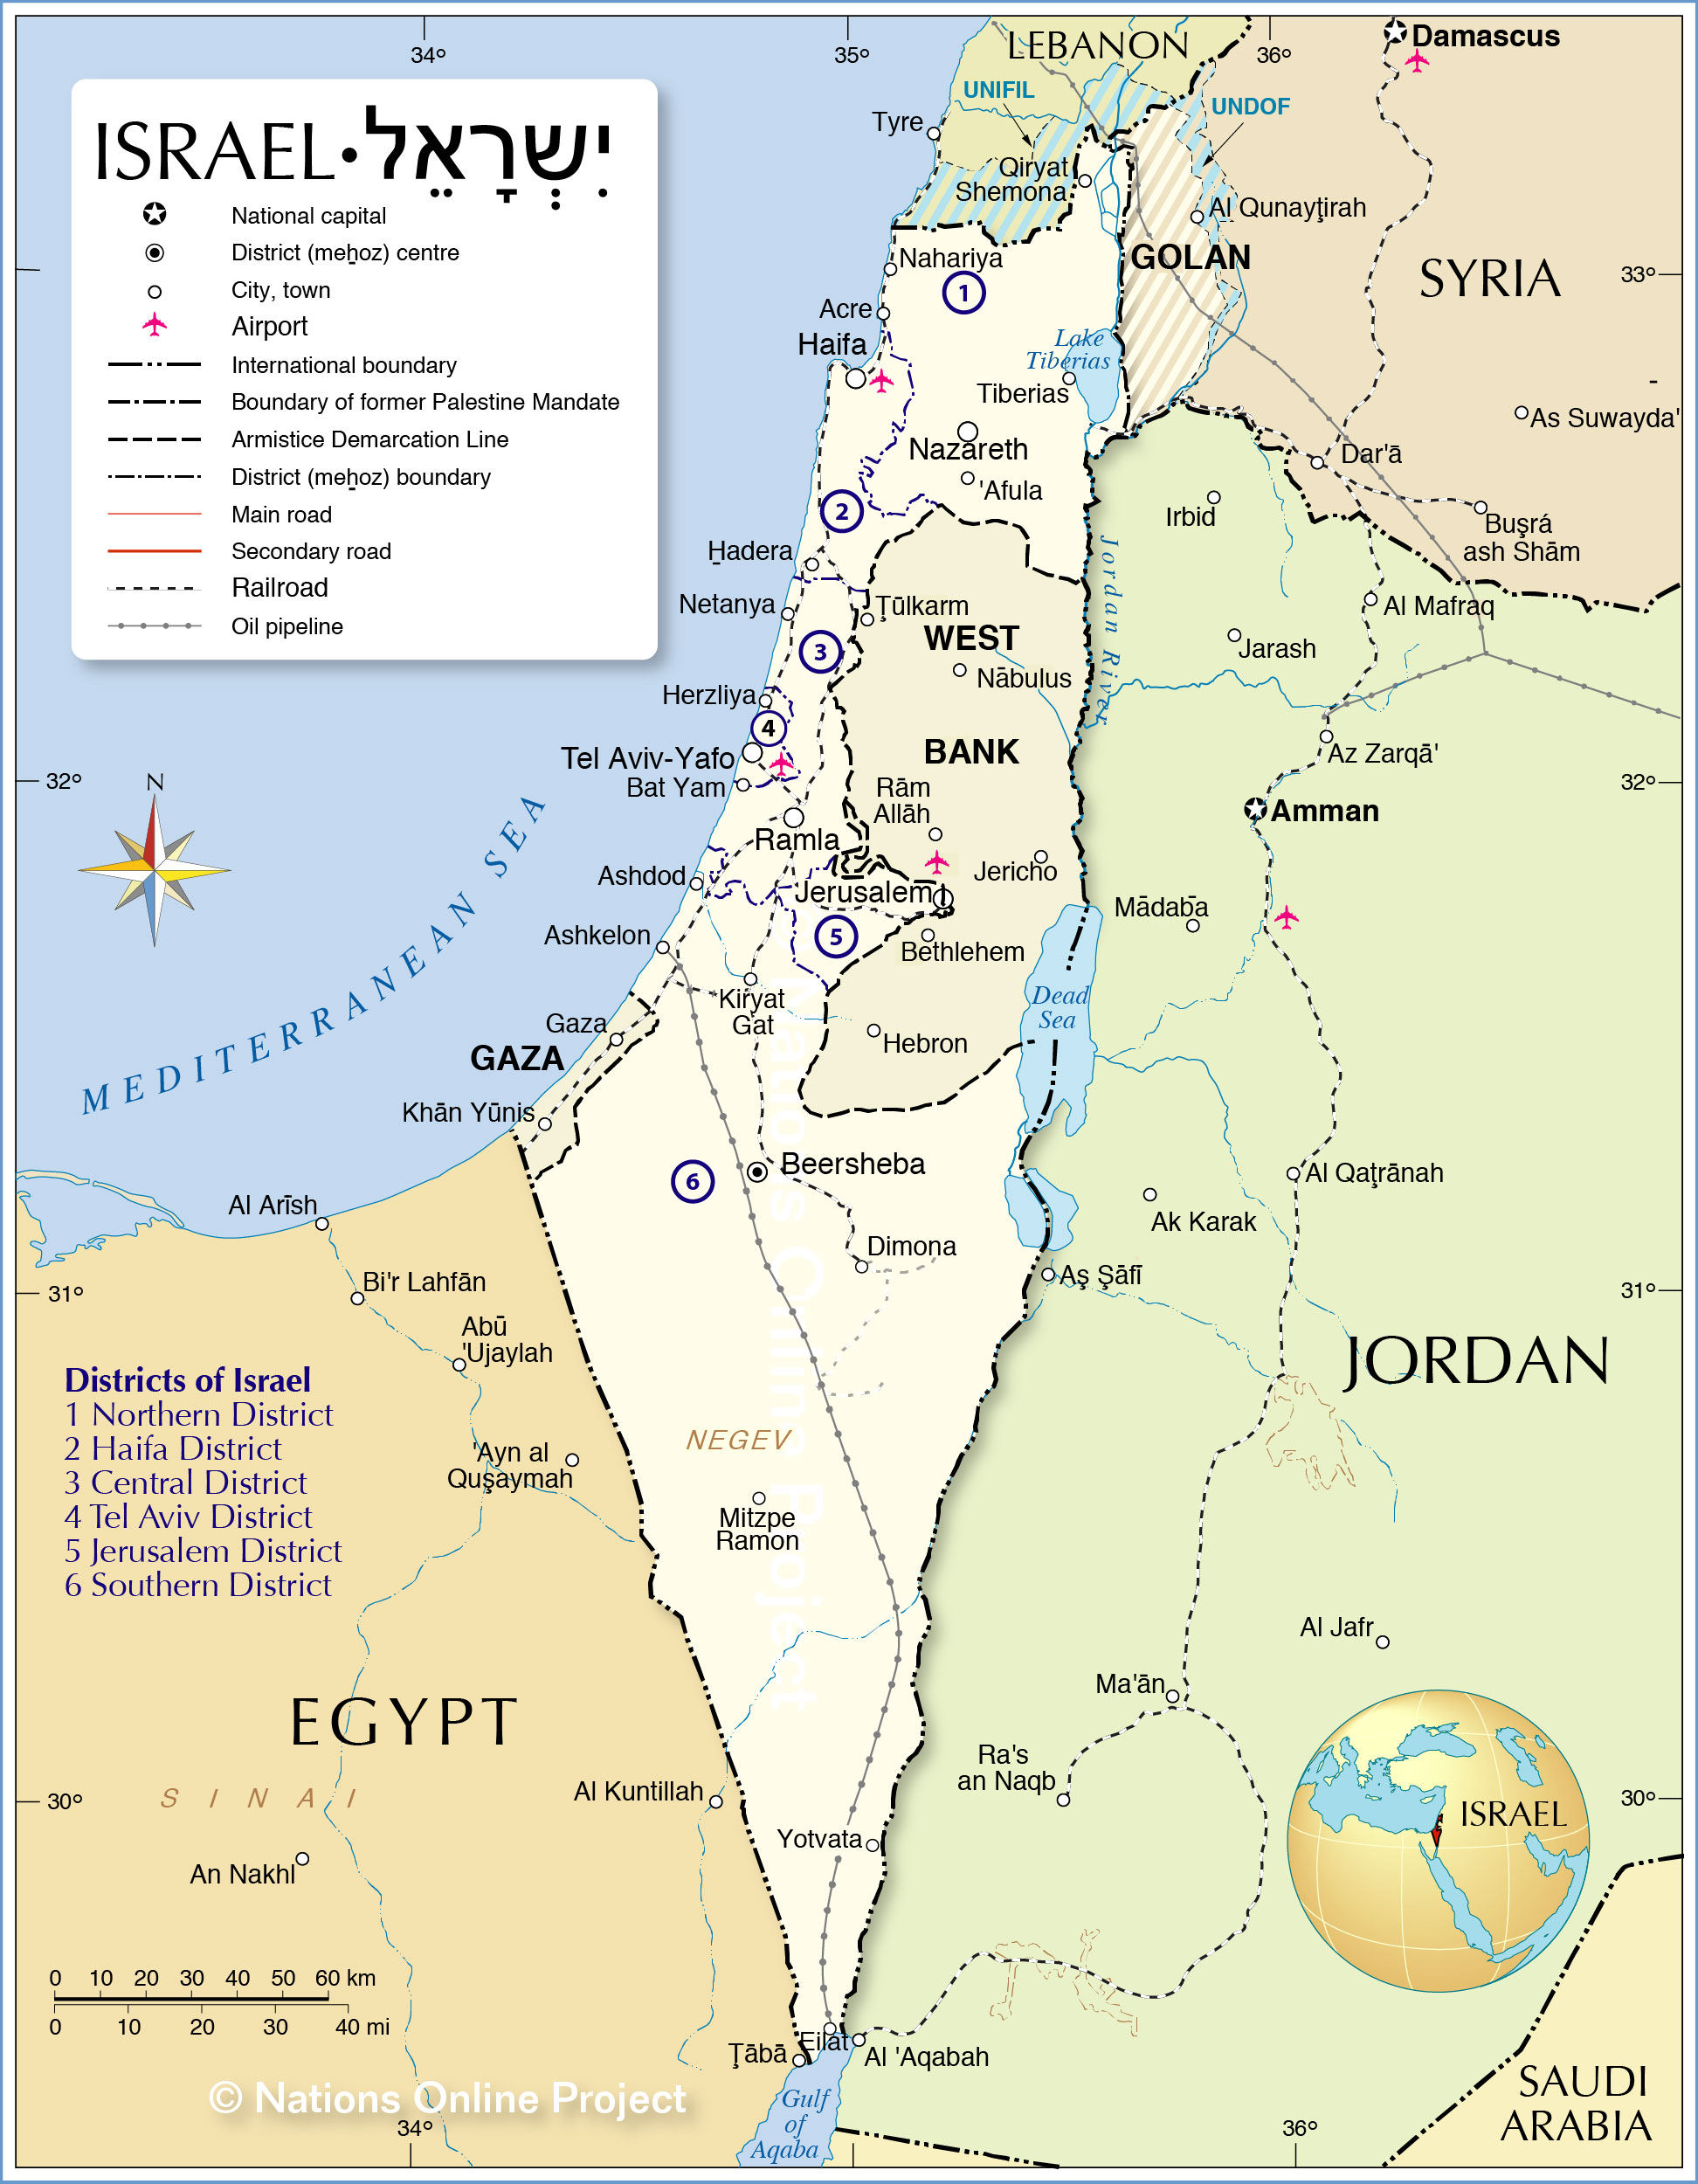 jerusalem location on world map Political Map Of Israel Nations Online Project jerusalem location on world map